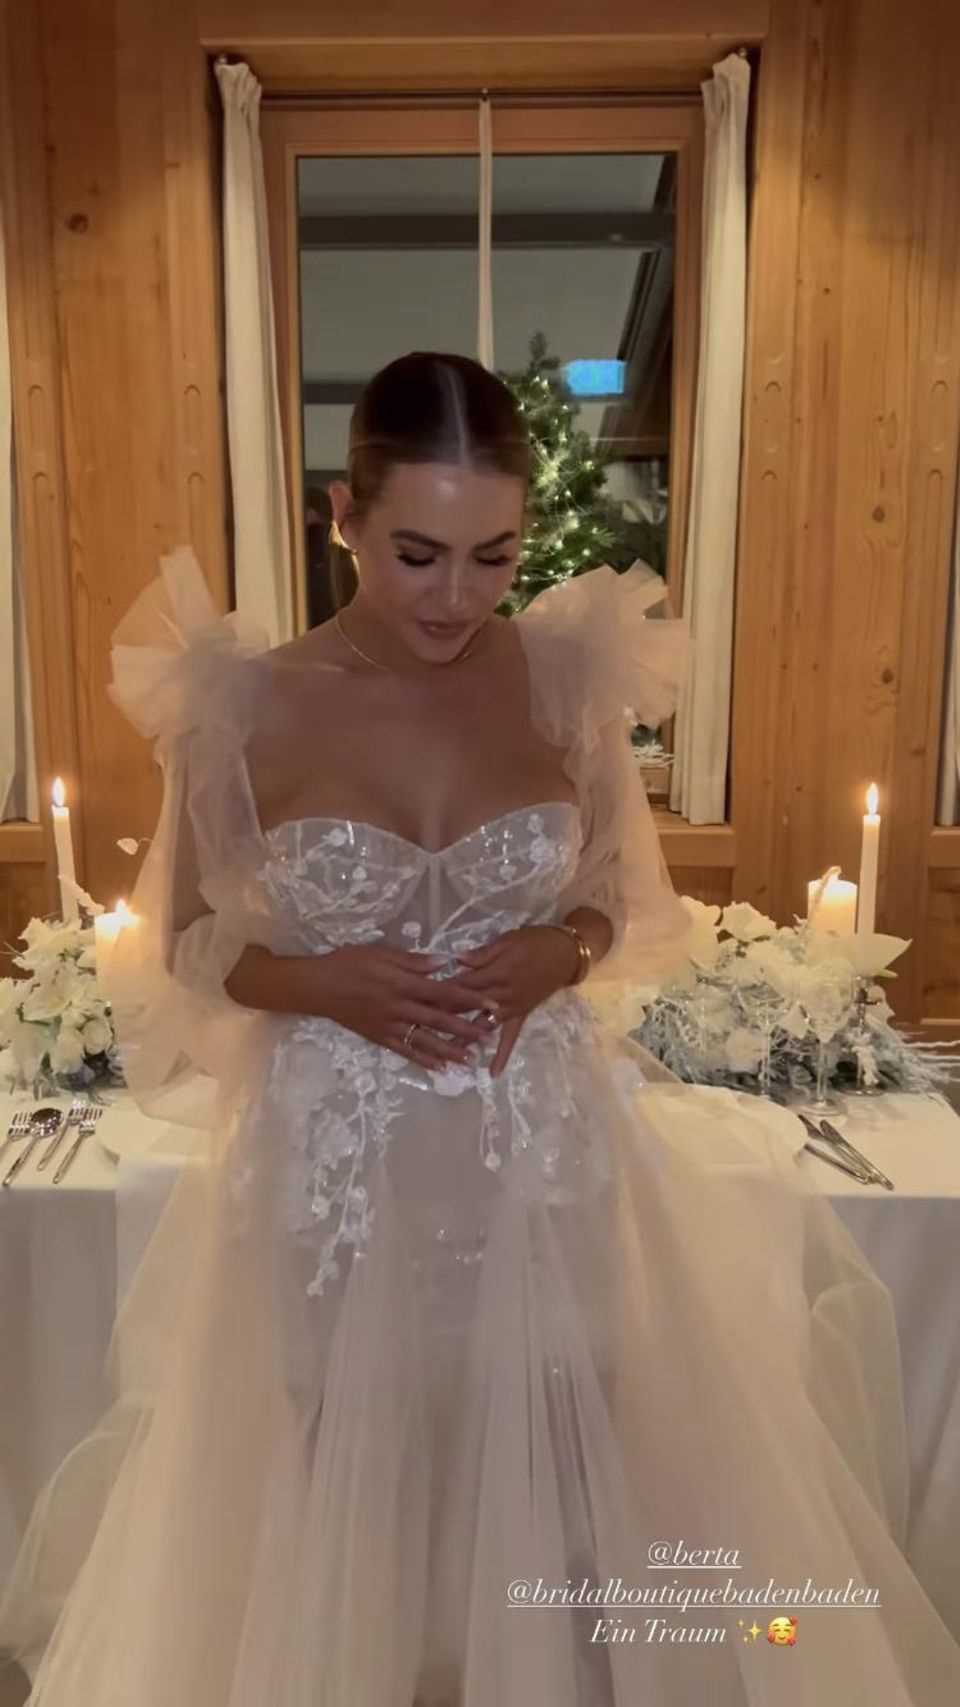 Jessica Paszka: She decided on two wedding dresses